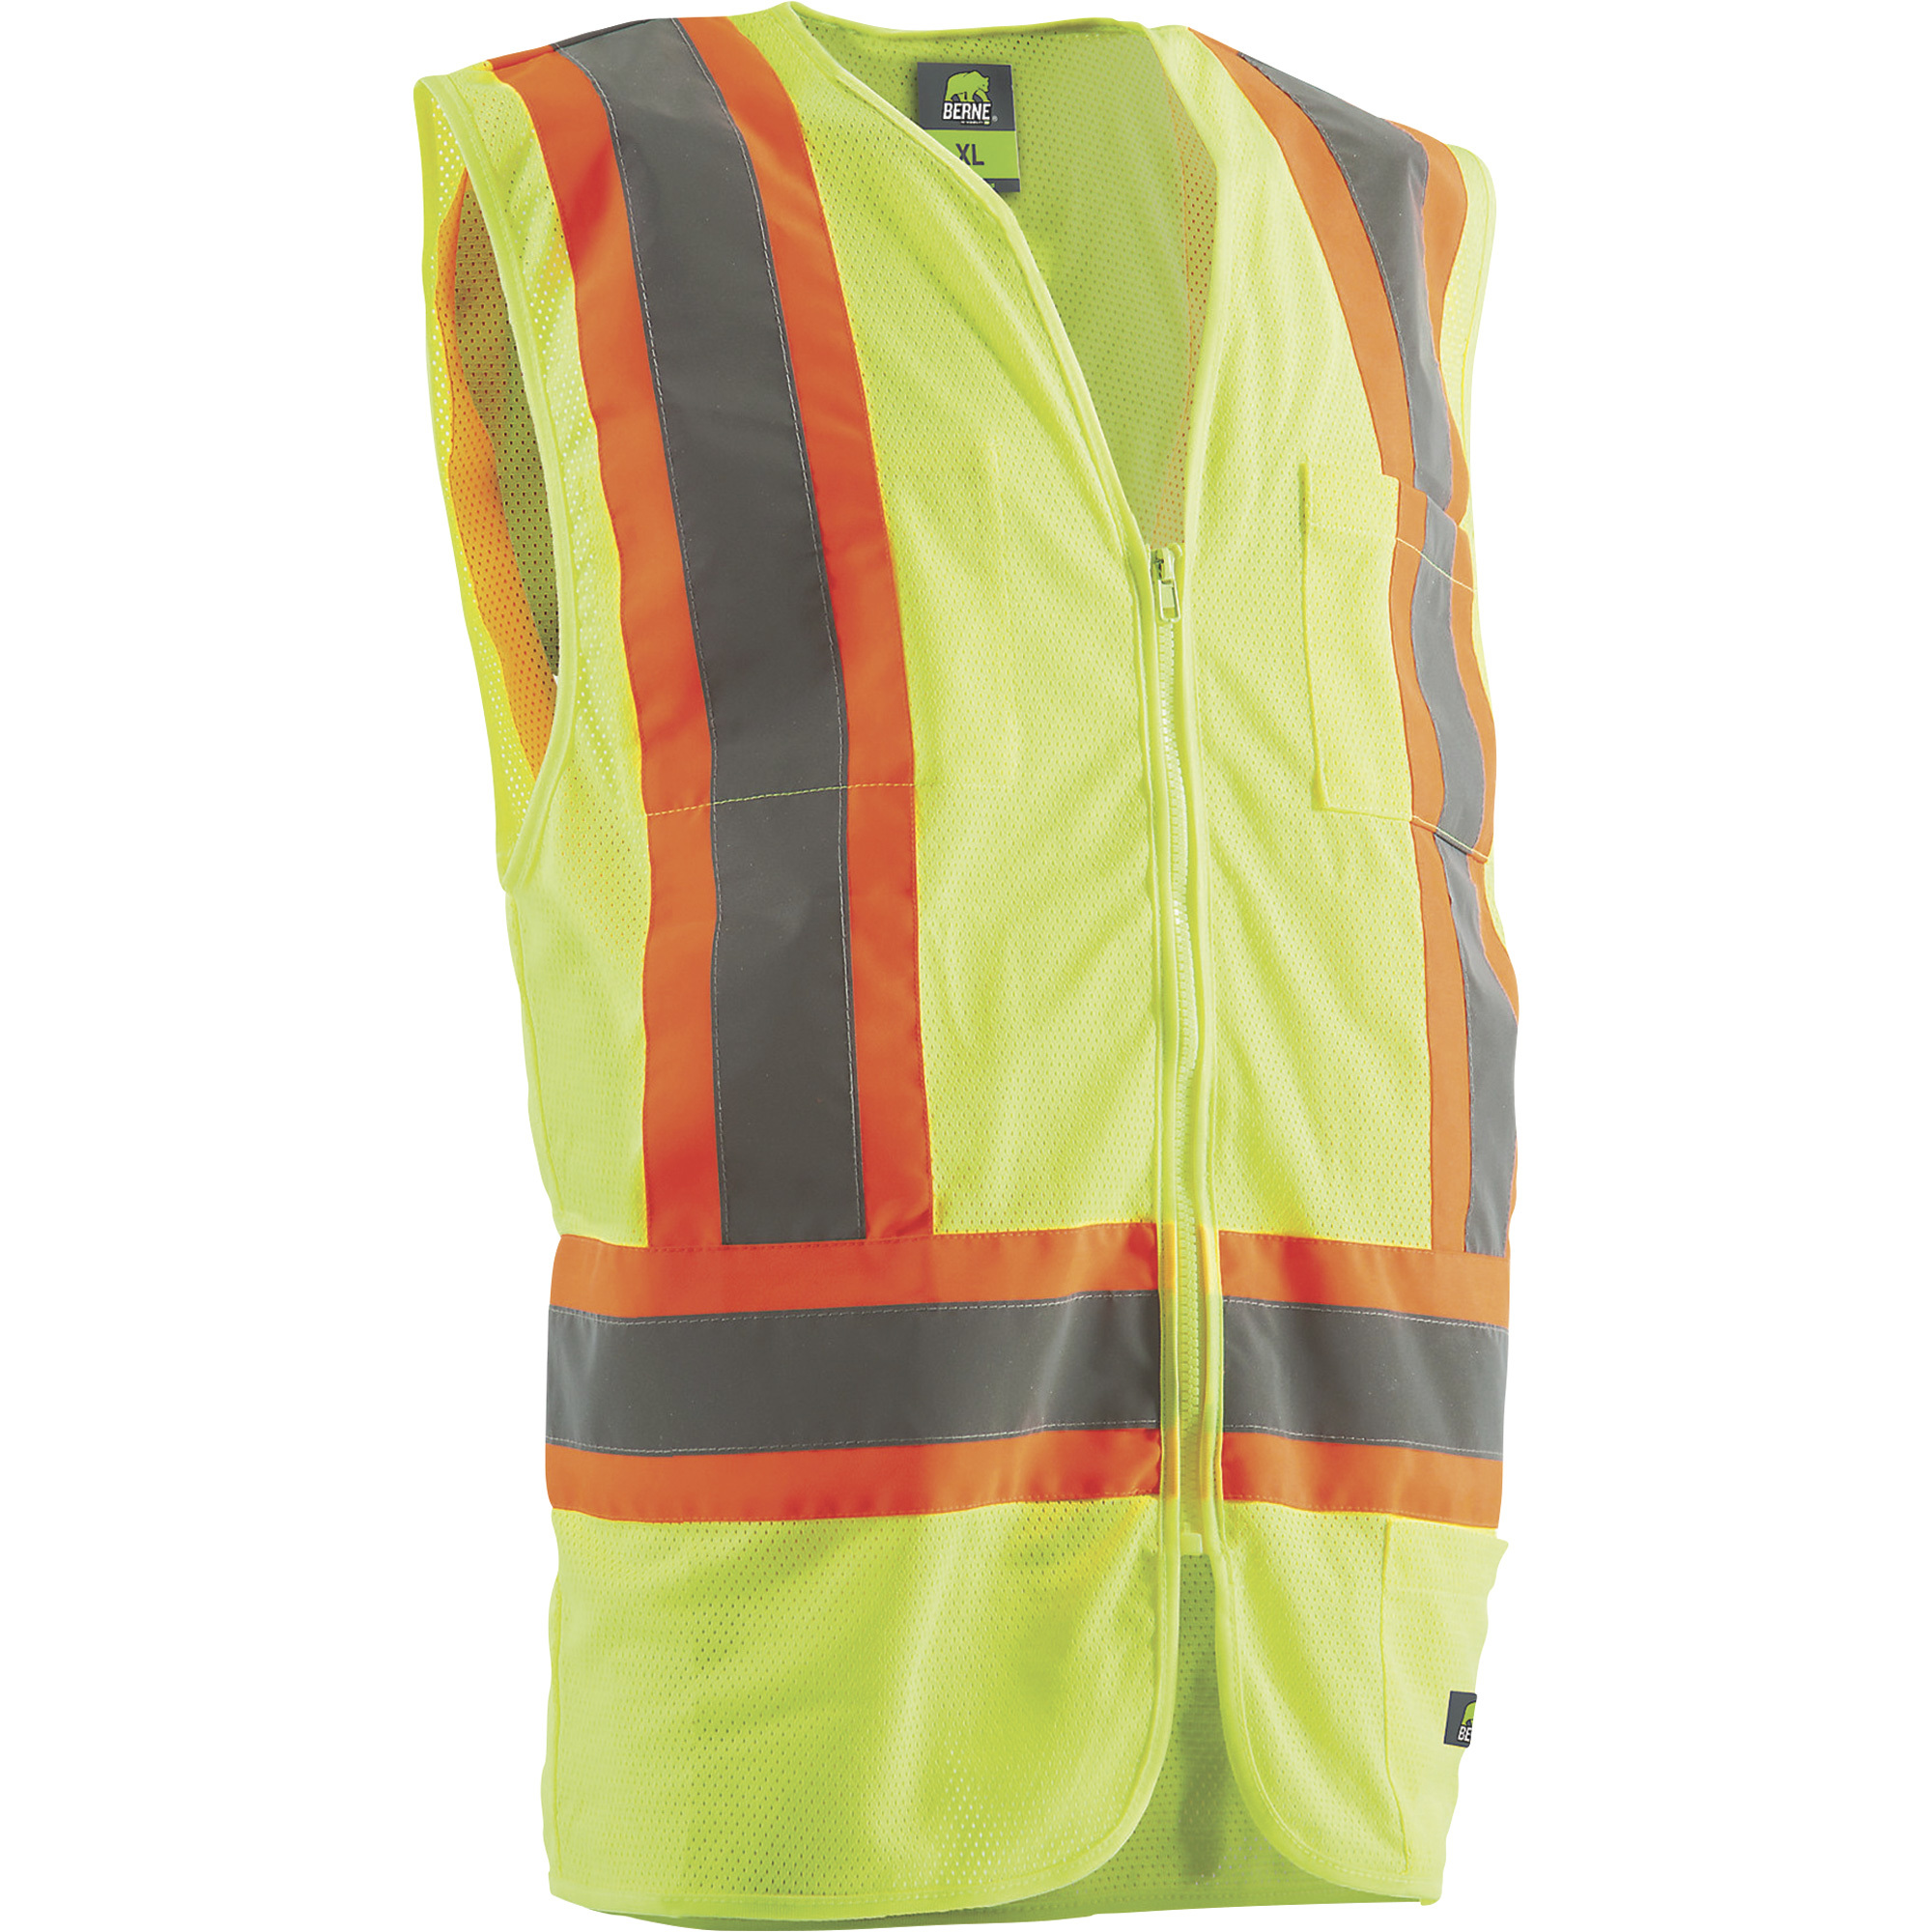 Berne Men's Class 2 High Visibility 2-Tone Safety Vest â Orange/Lime, XL, Model HVV046YWBT